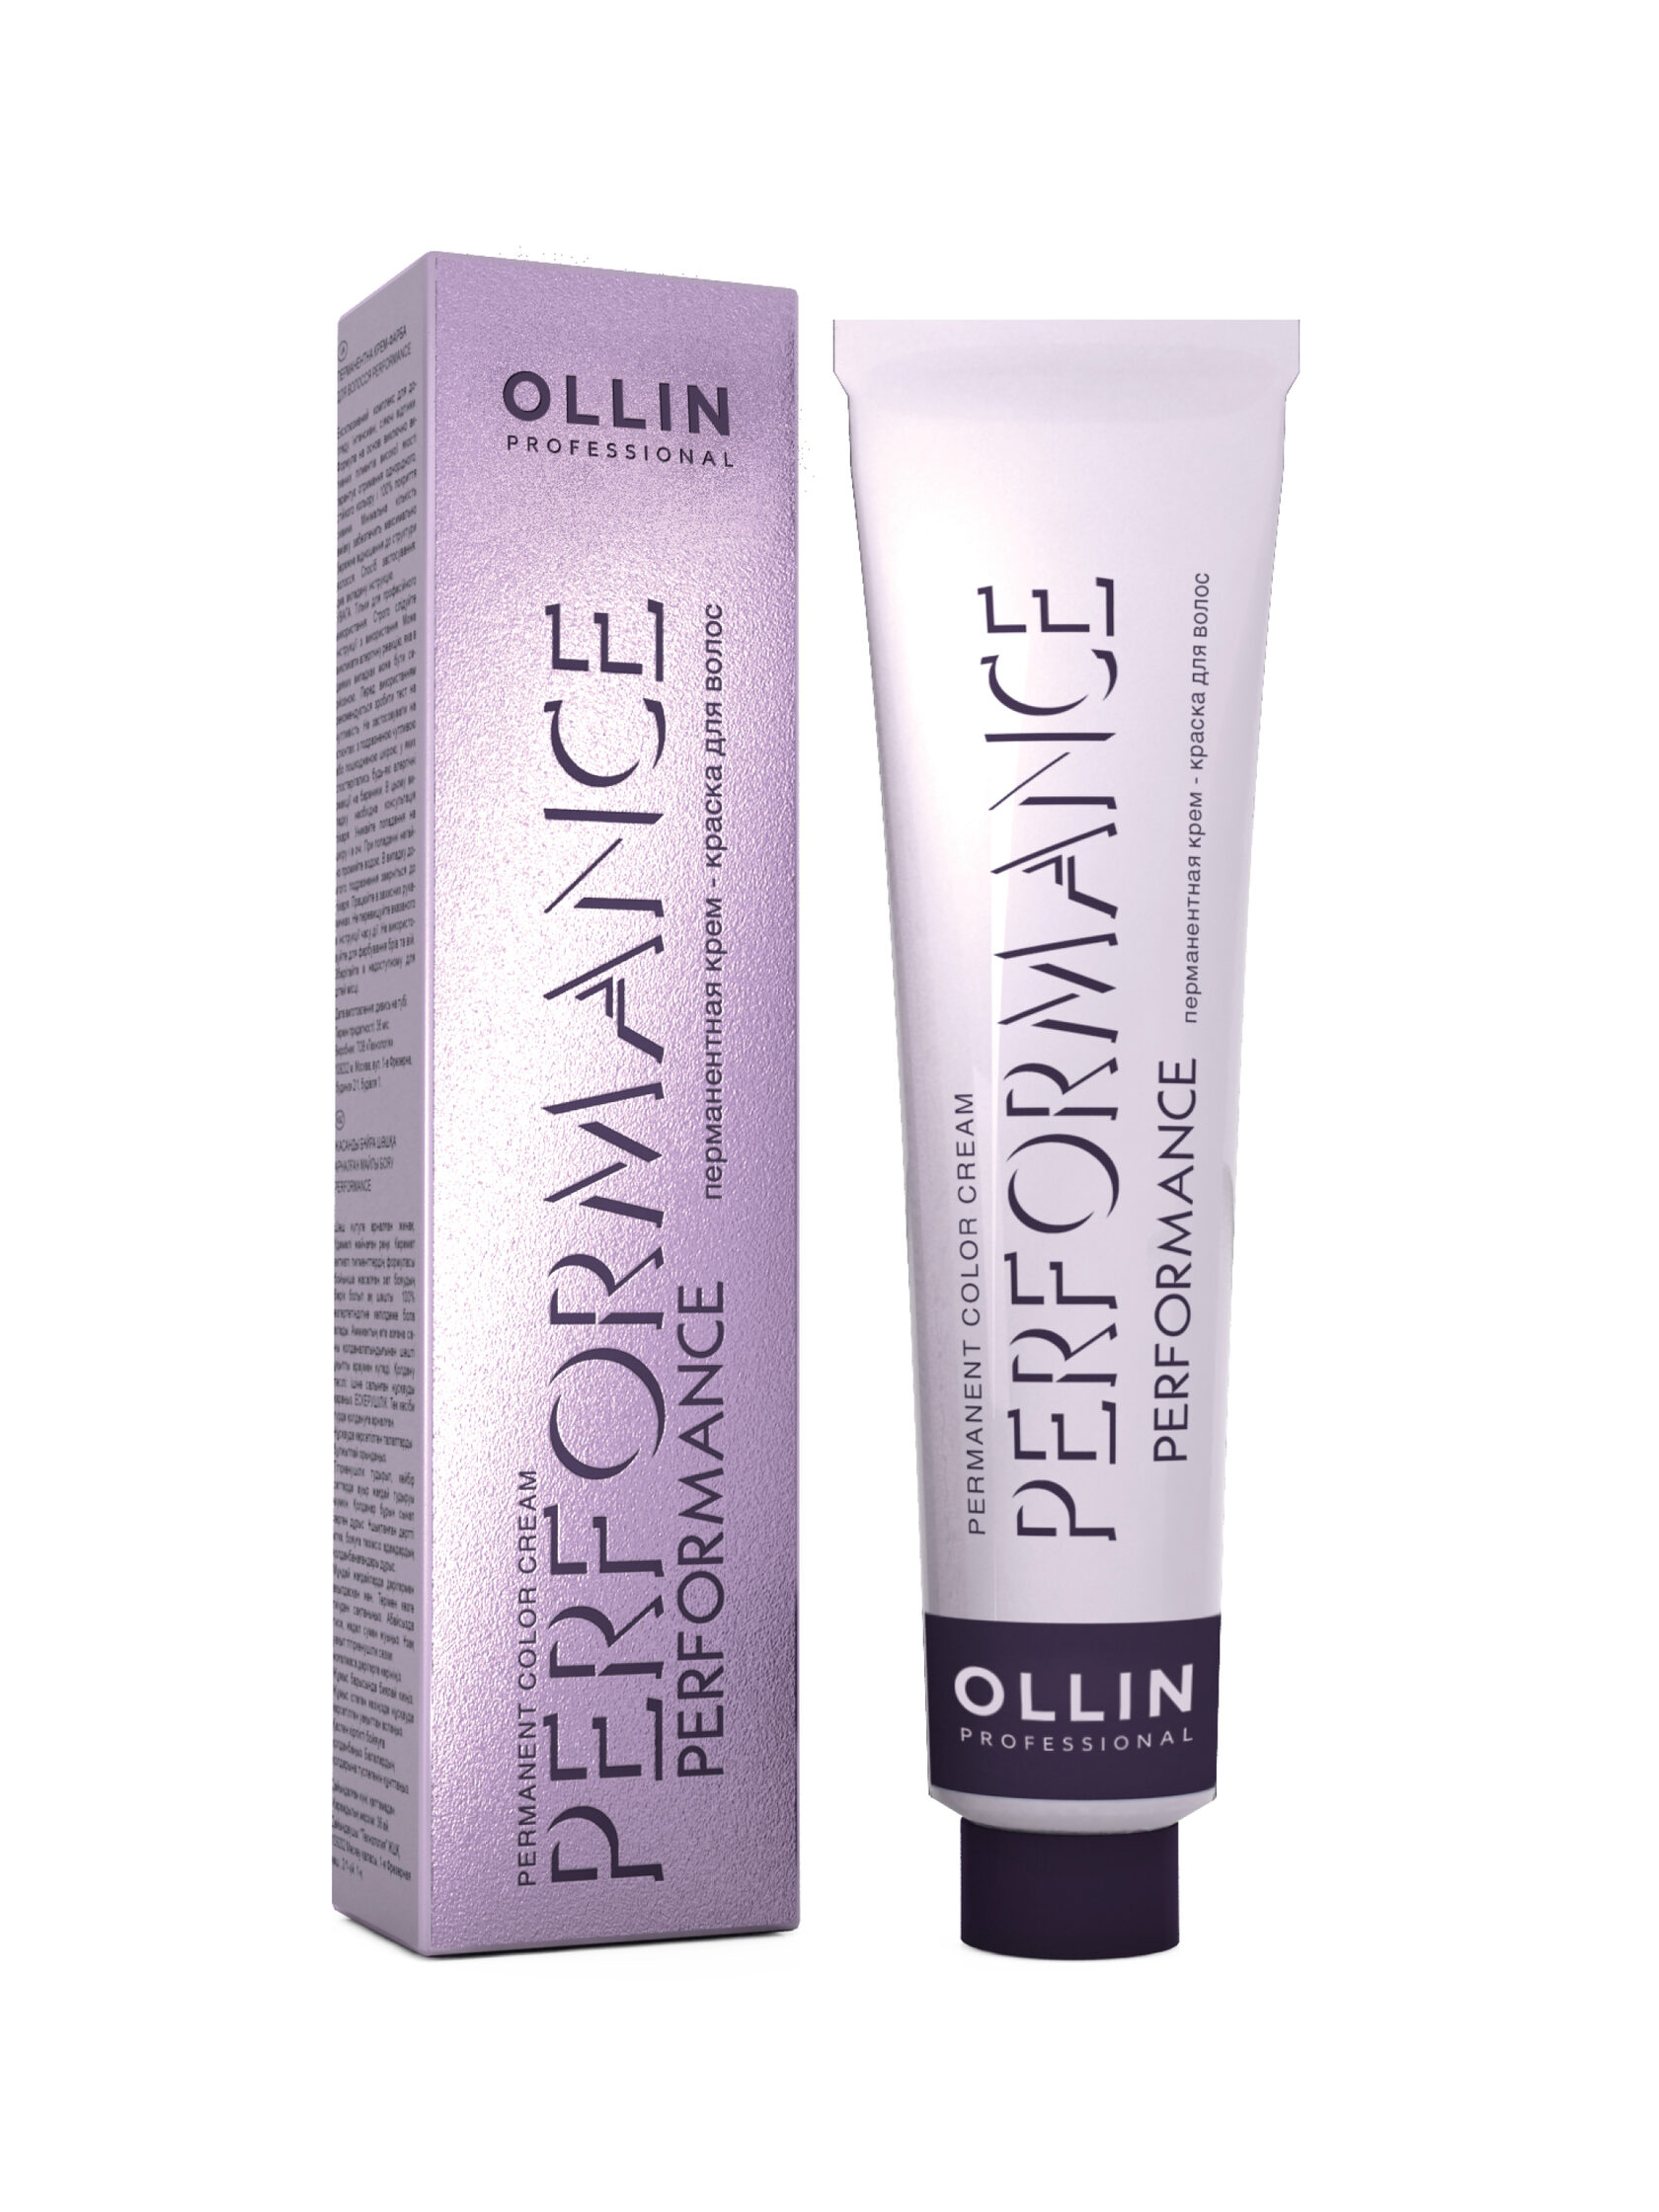 Что значит перманентная краска для волос. Ollin Performance 0/88 синий 60мл. Ollin professional Performance перманентная крем-краска для волос, 60 мл. Краска Оллин перфоманс 10.26. Ollin Performance 6/5.